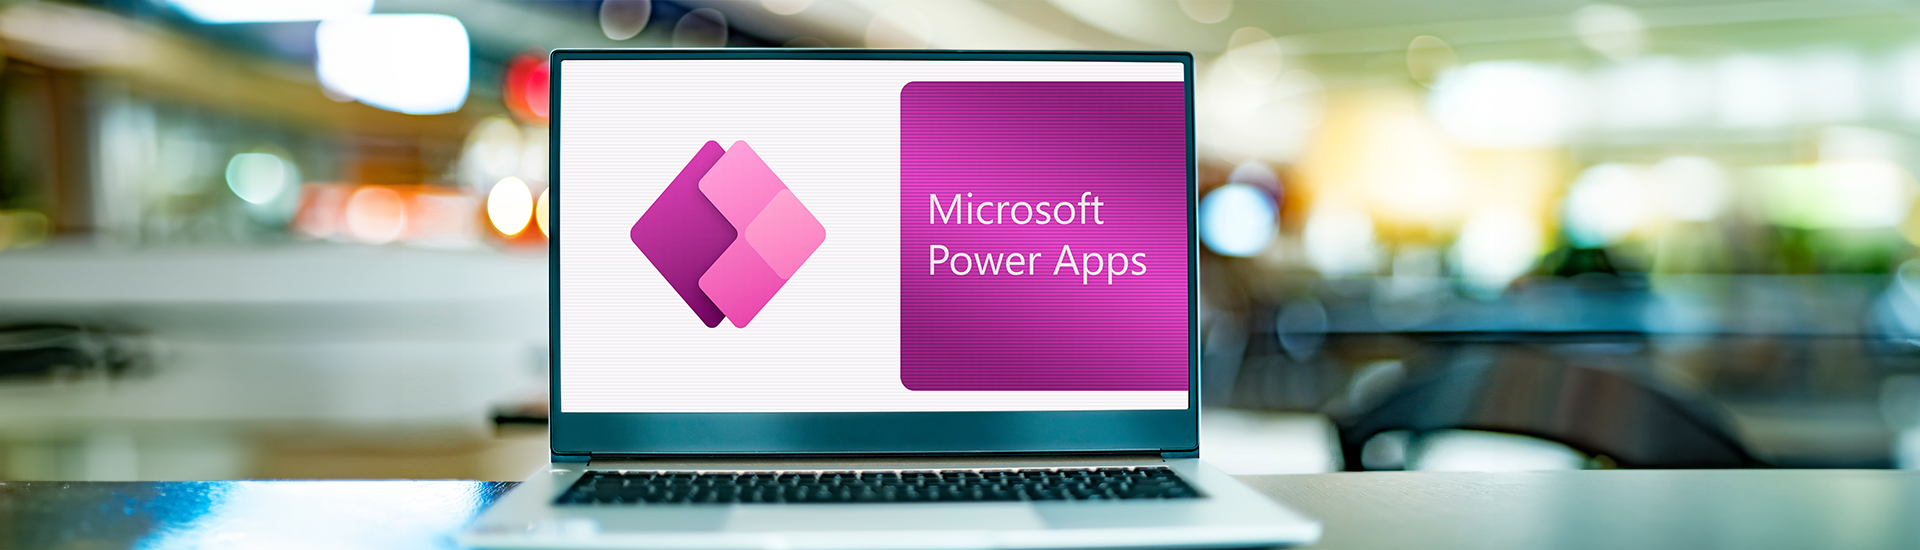 Microsoft-Power-Apps-Mockup